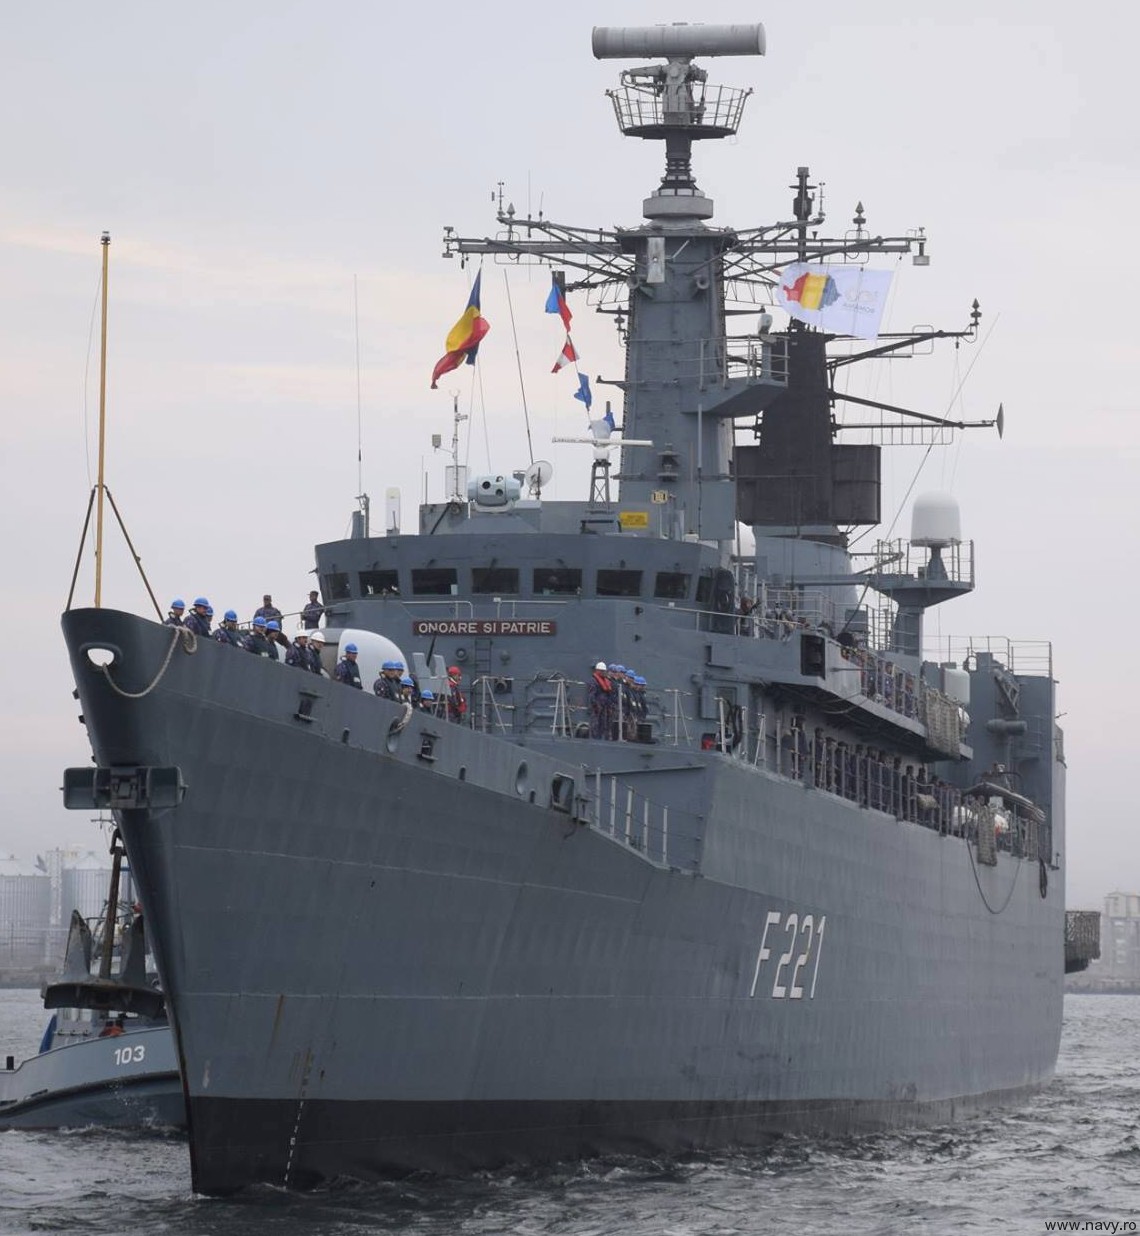 f-221 ros regele ferdinand frigate romanian navy type 22 broadsword class 52